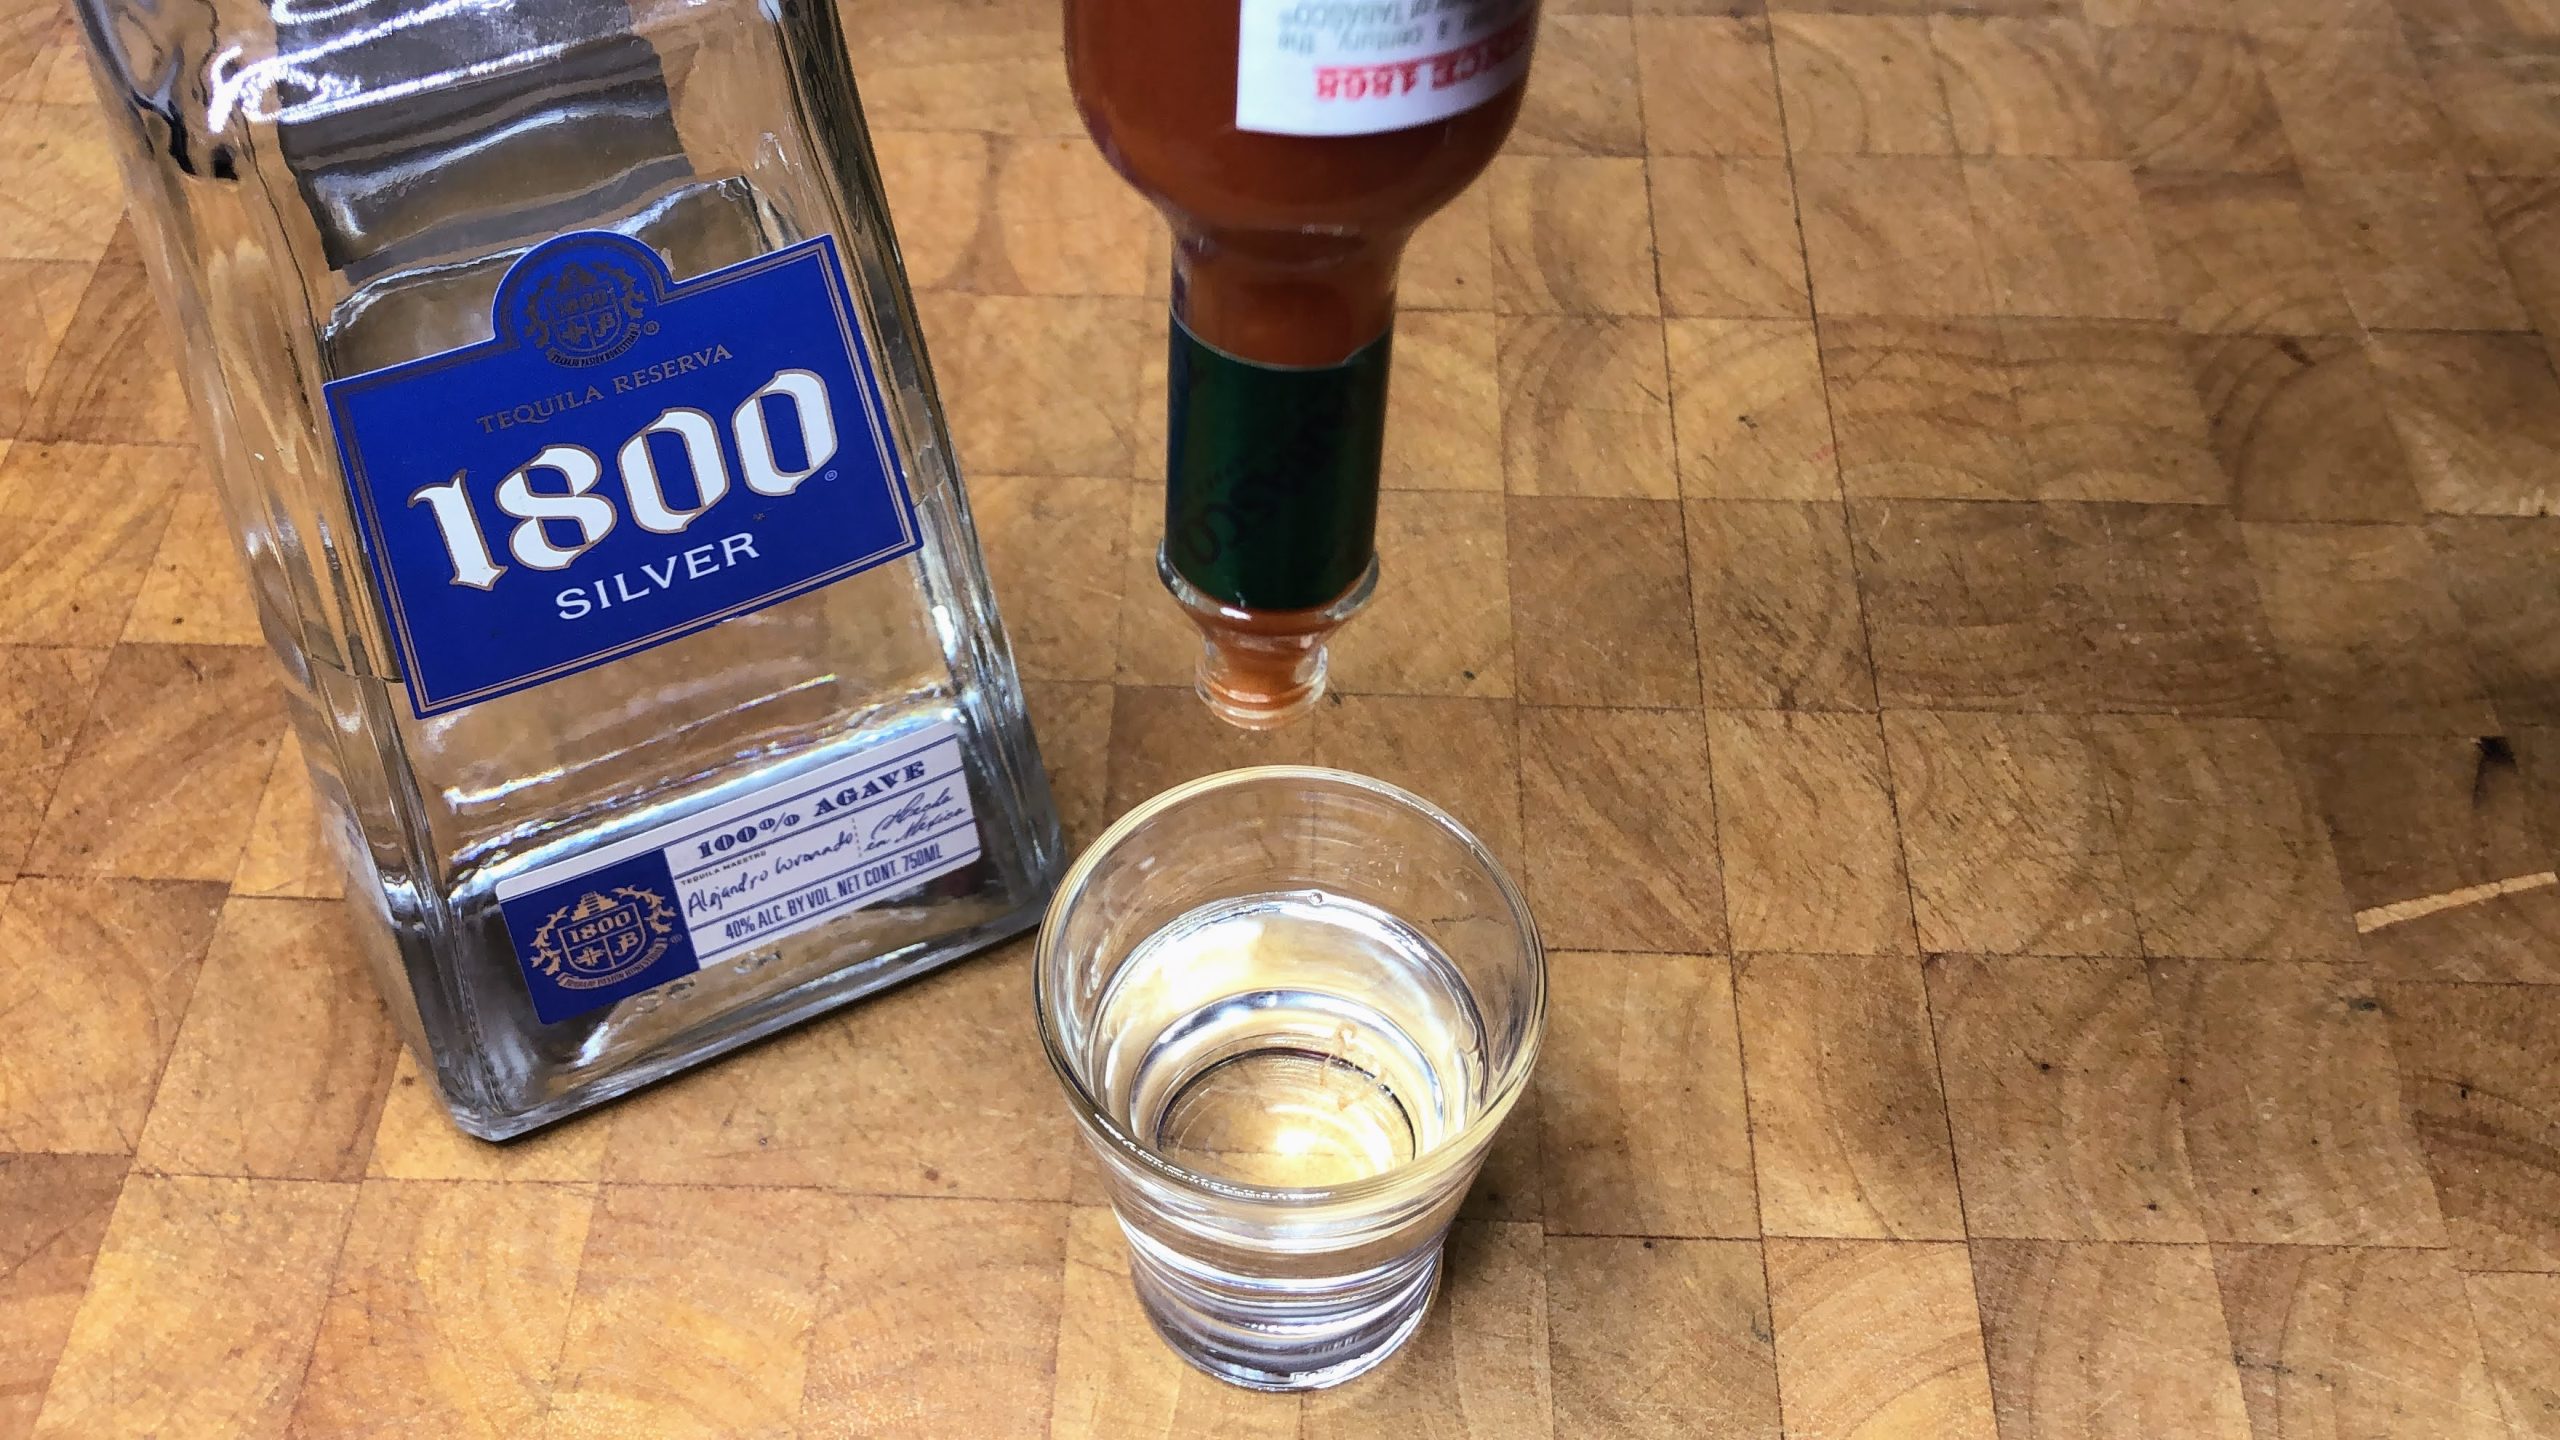 Adding tabasco to a shot glass.